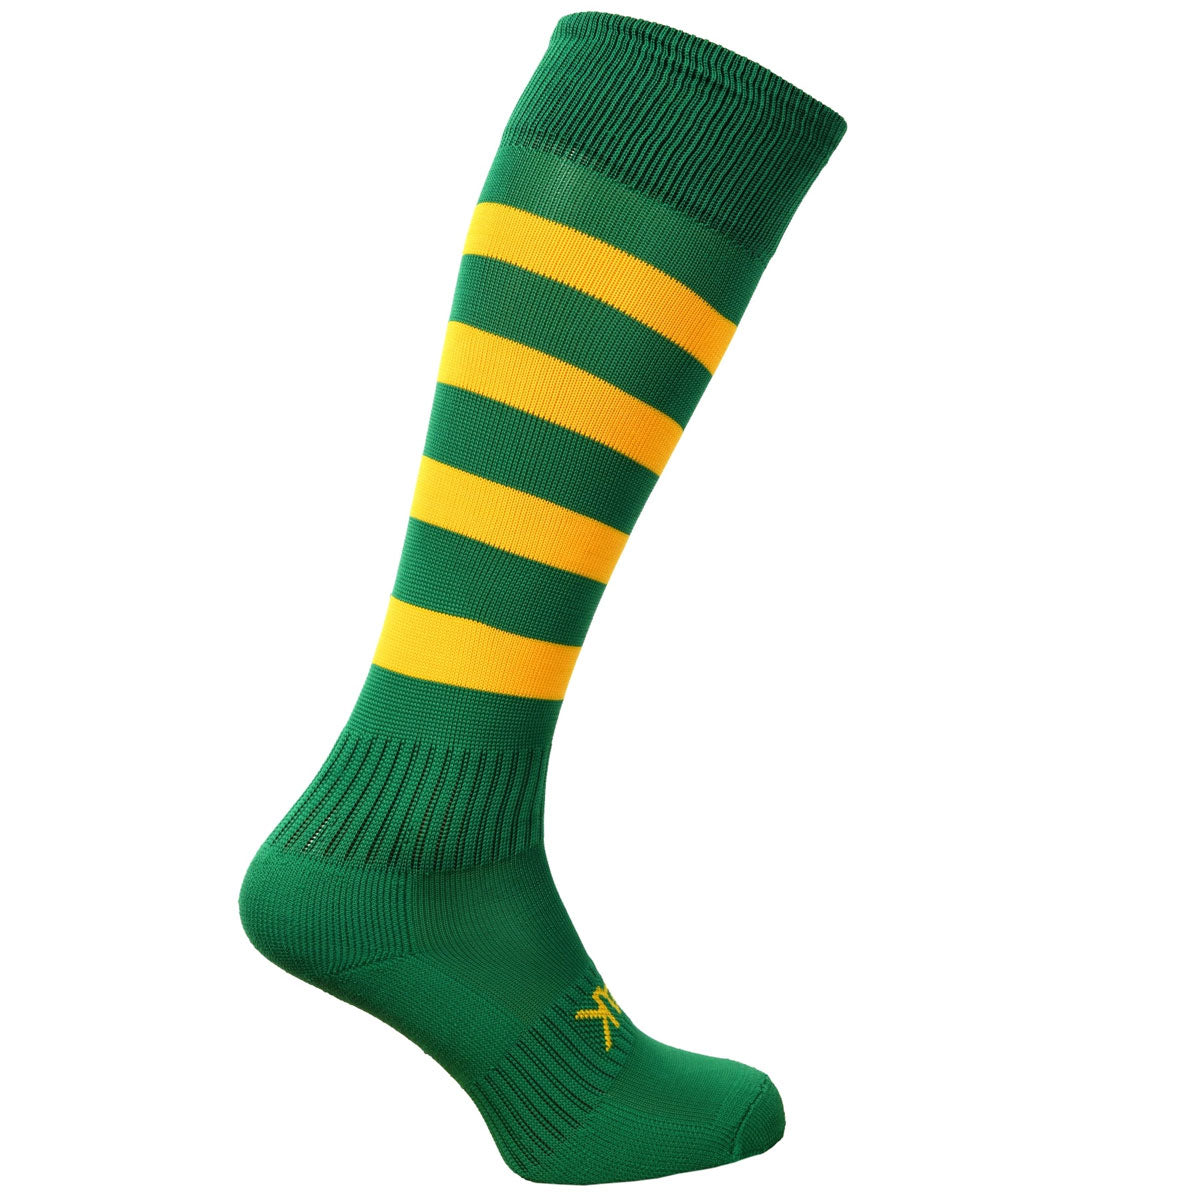 Atak Hooped Sports Socks - Youth - Green/Gold